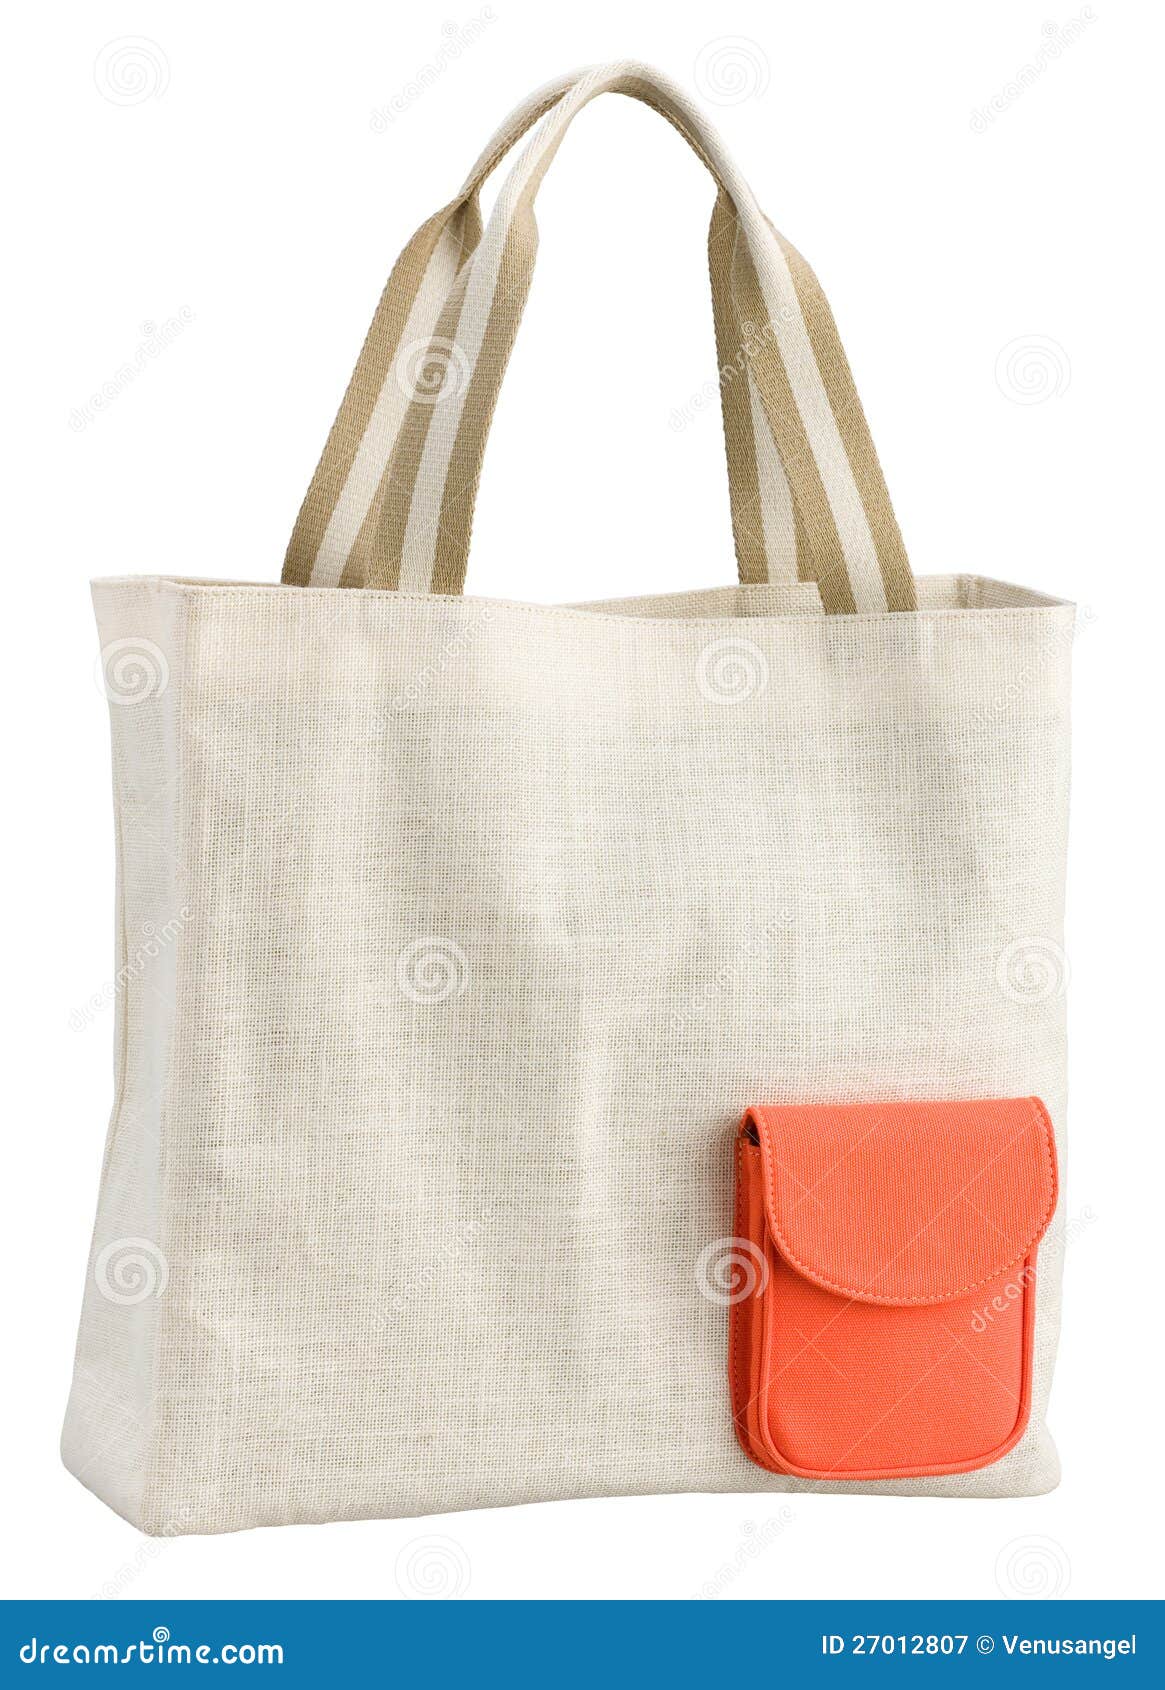 Reusable cloth bag for reduce plastic bag when shopping.